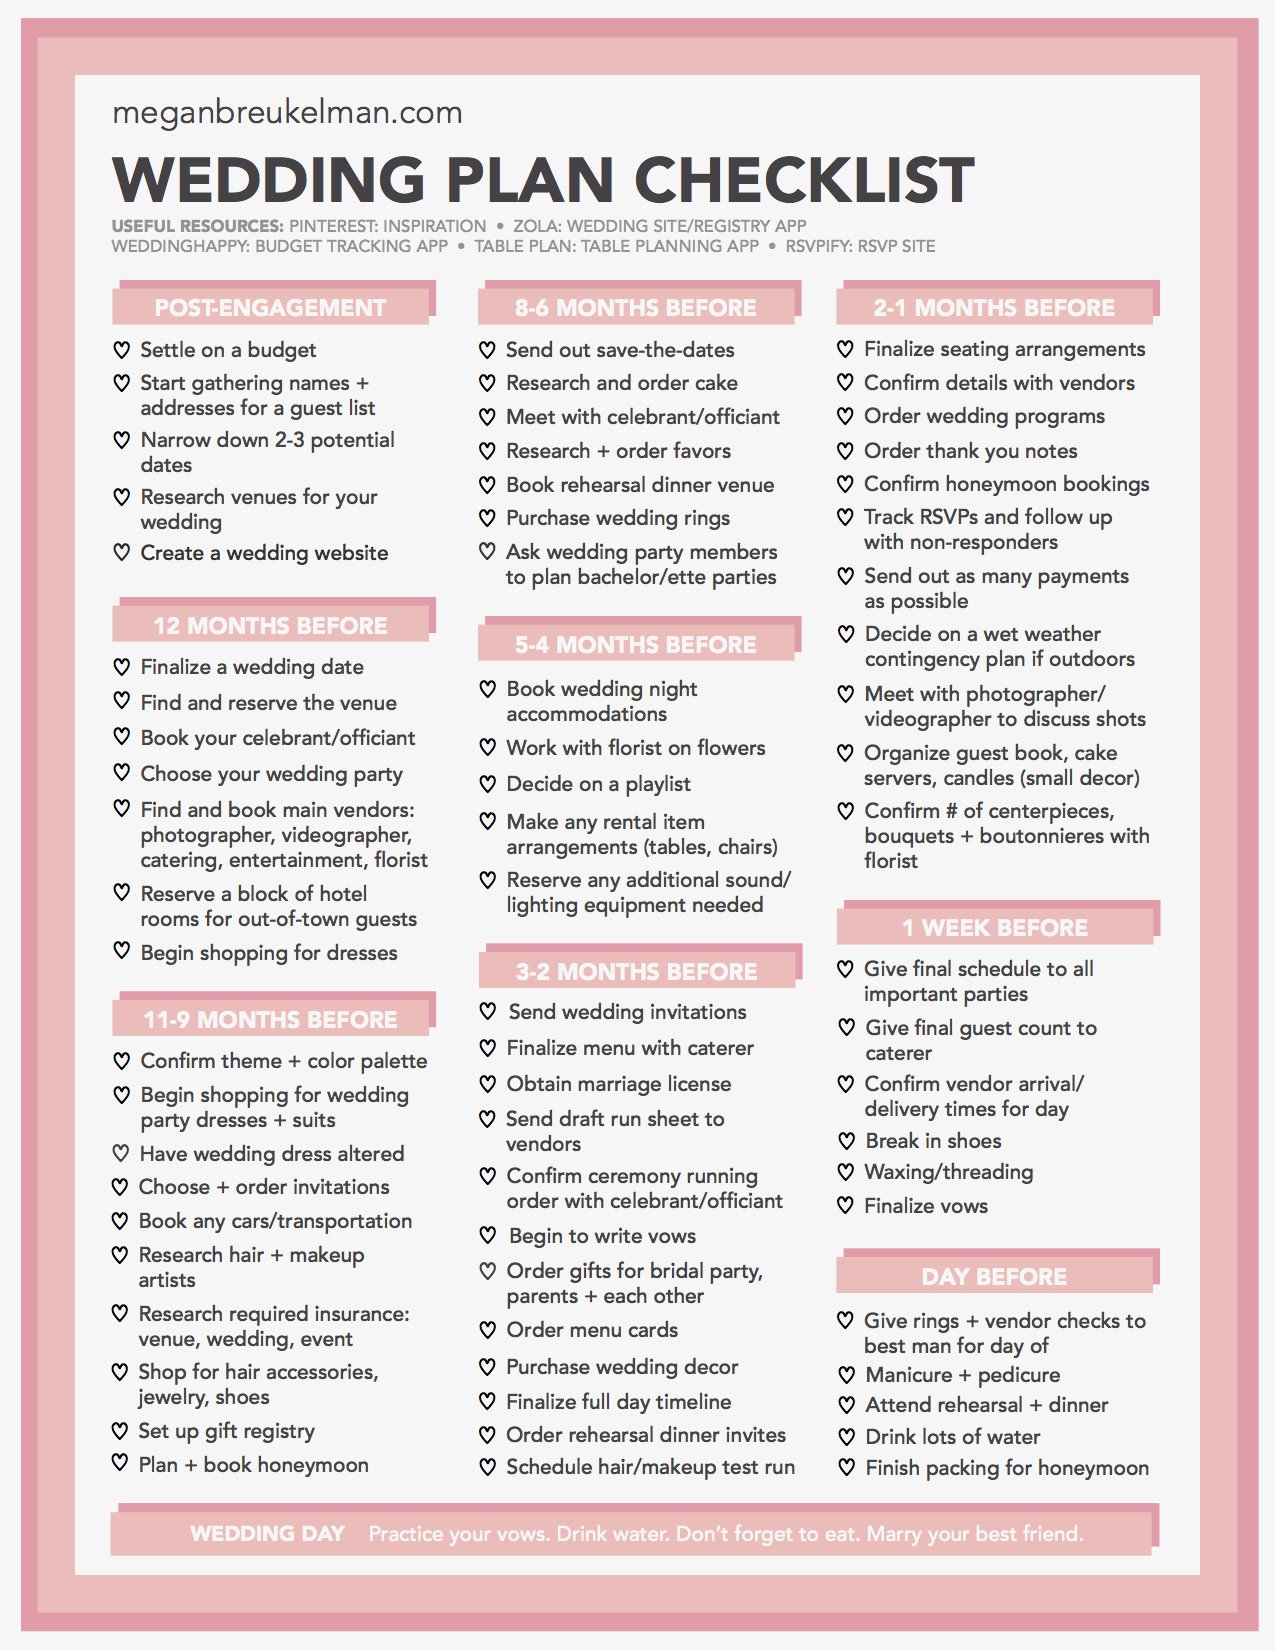 wedding-countdown-checklist-free-printable-wedding-checklist-pdf-megan